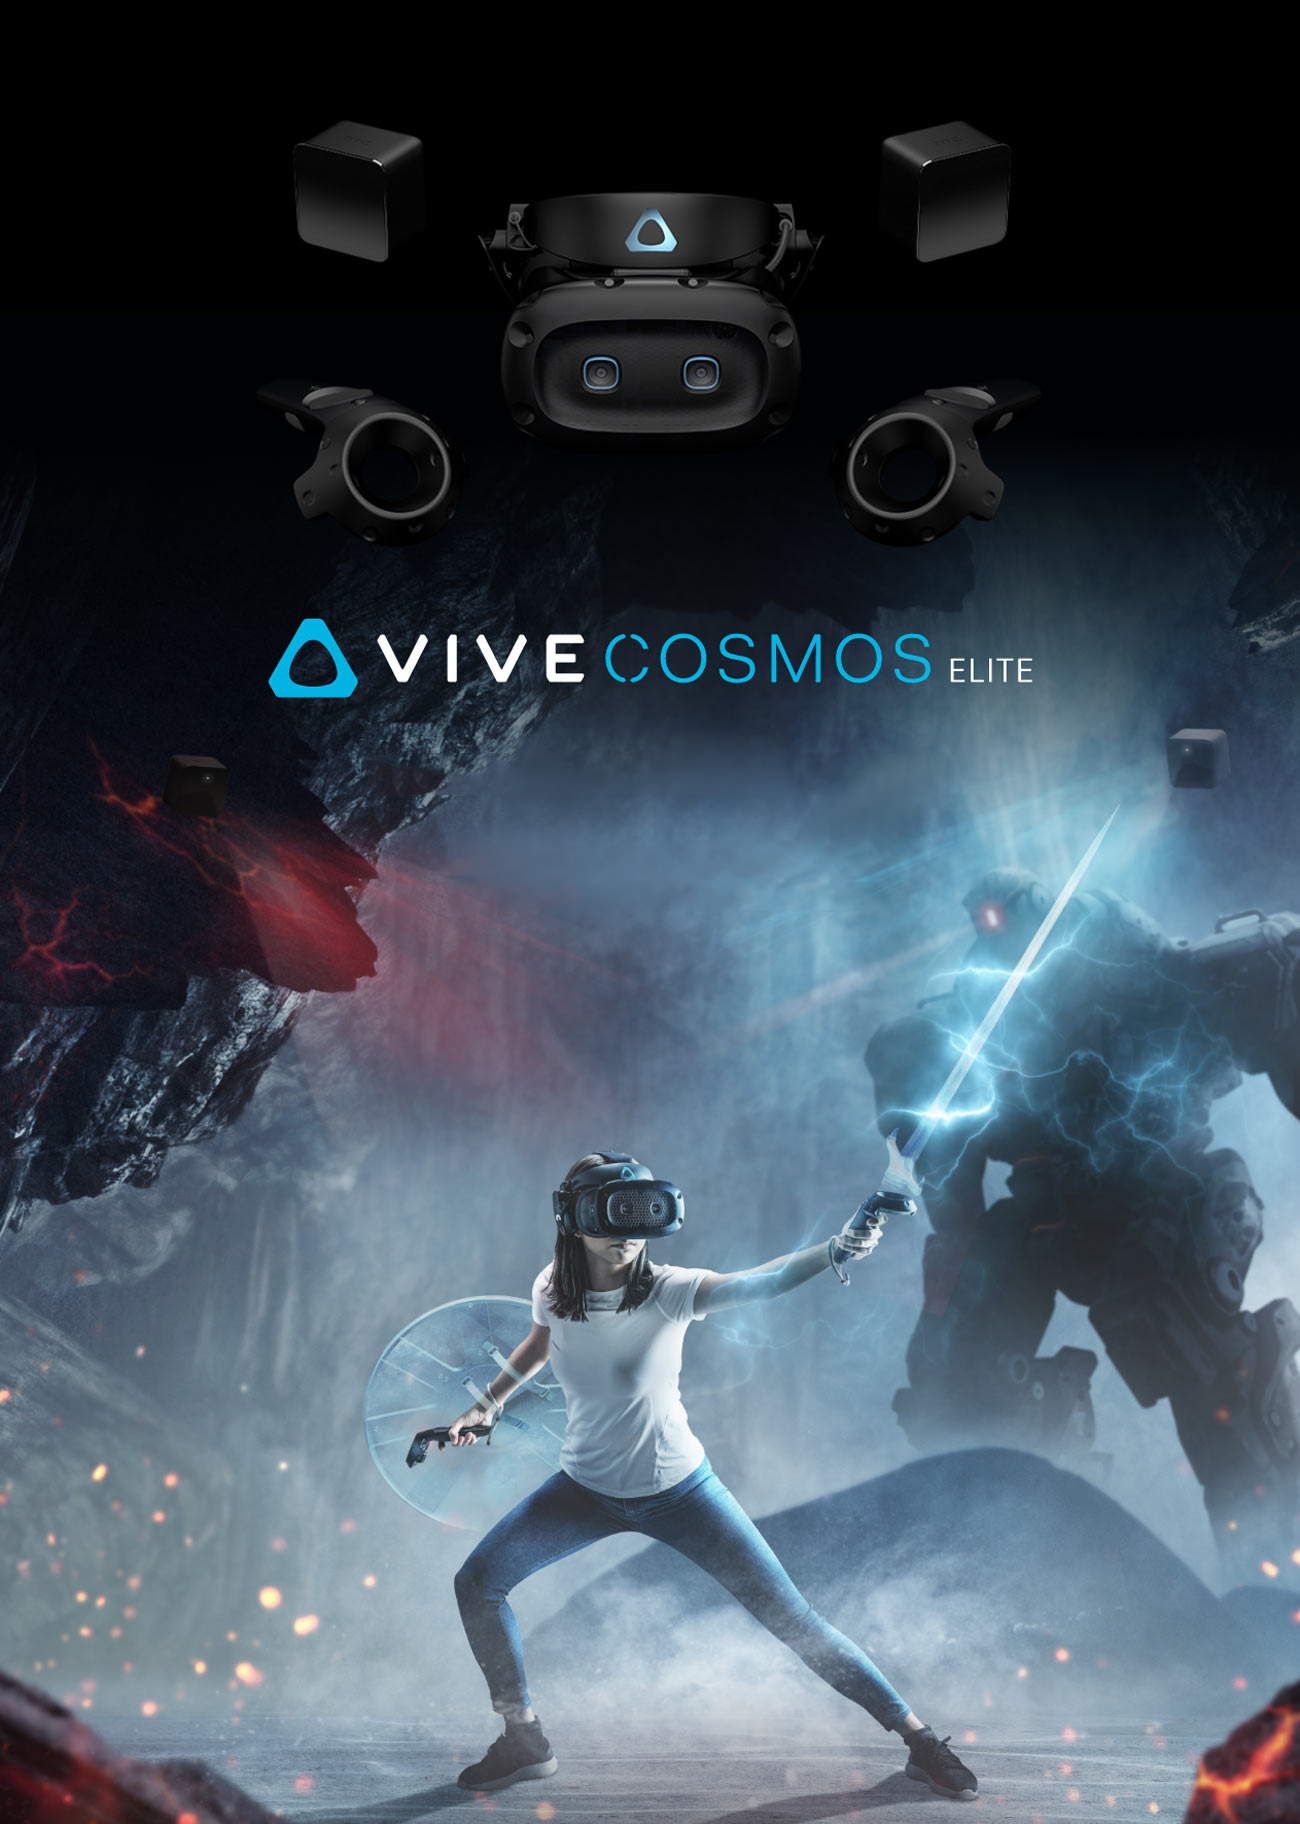 HTC VIVE Cosmos Elite VR Headset facing forward